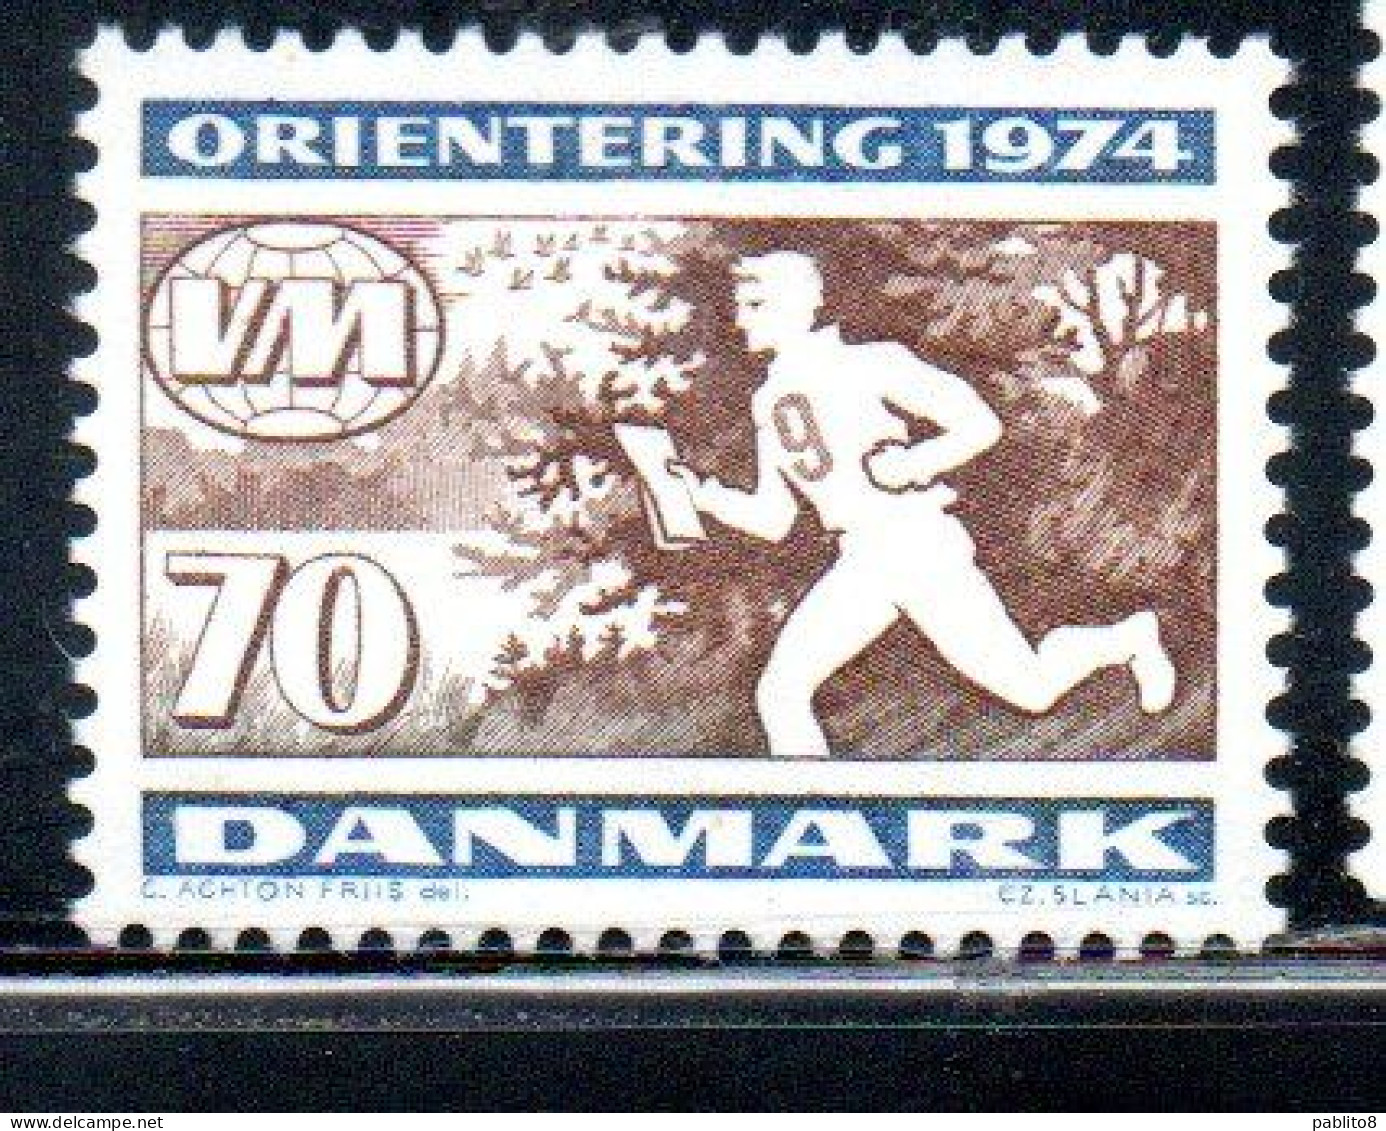 DANEMARK DANMARK DENMARK DANIMARCA 1974 WORLD ORIENTEERING CHAMPIONSHIPS RUNNER 70o MNH - Ungebraucht